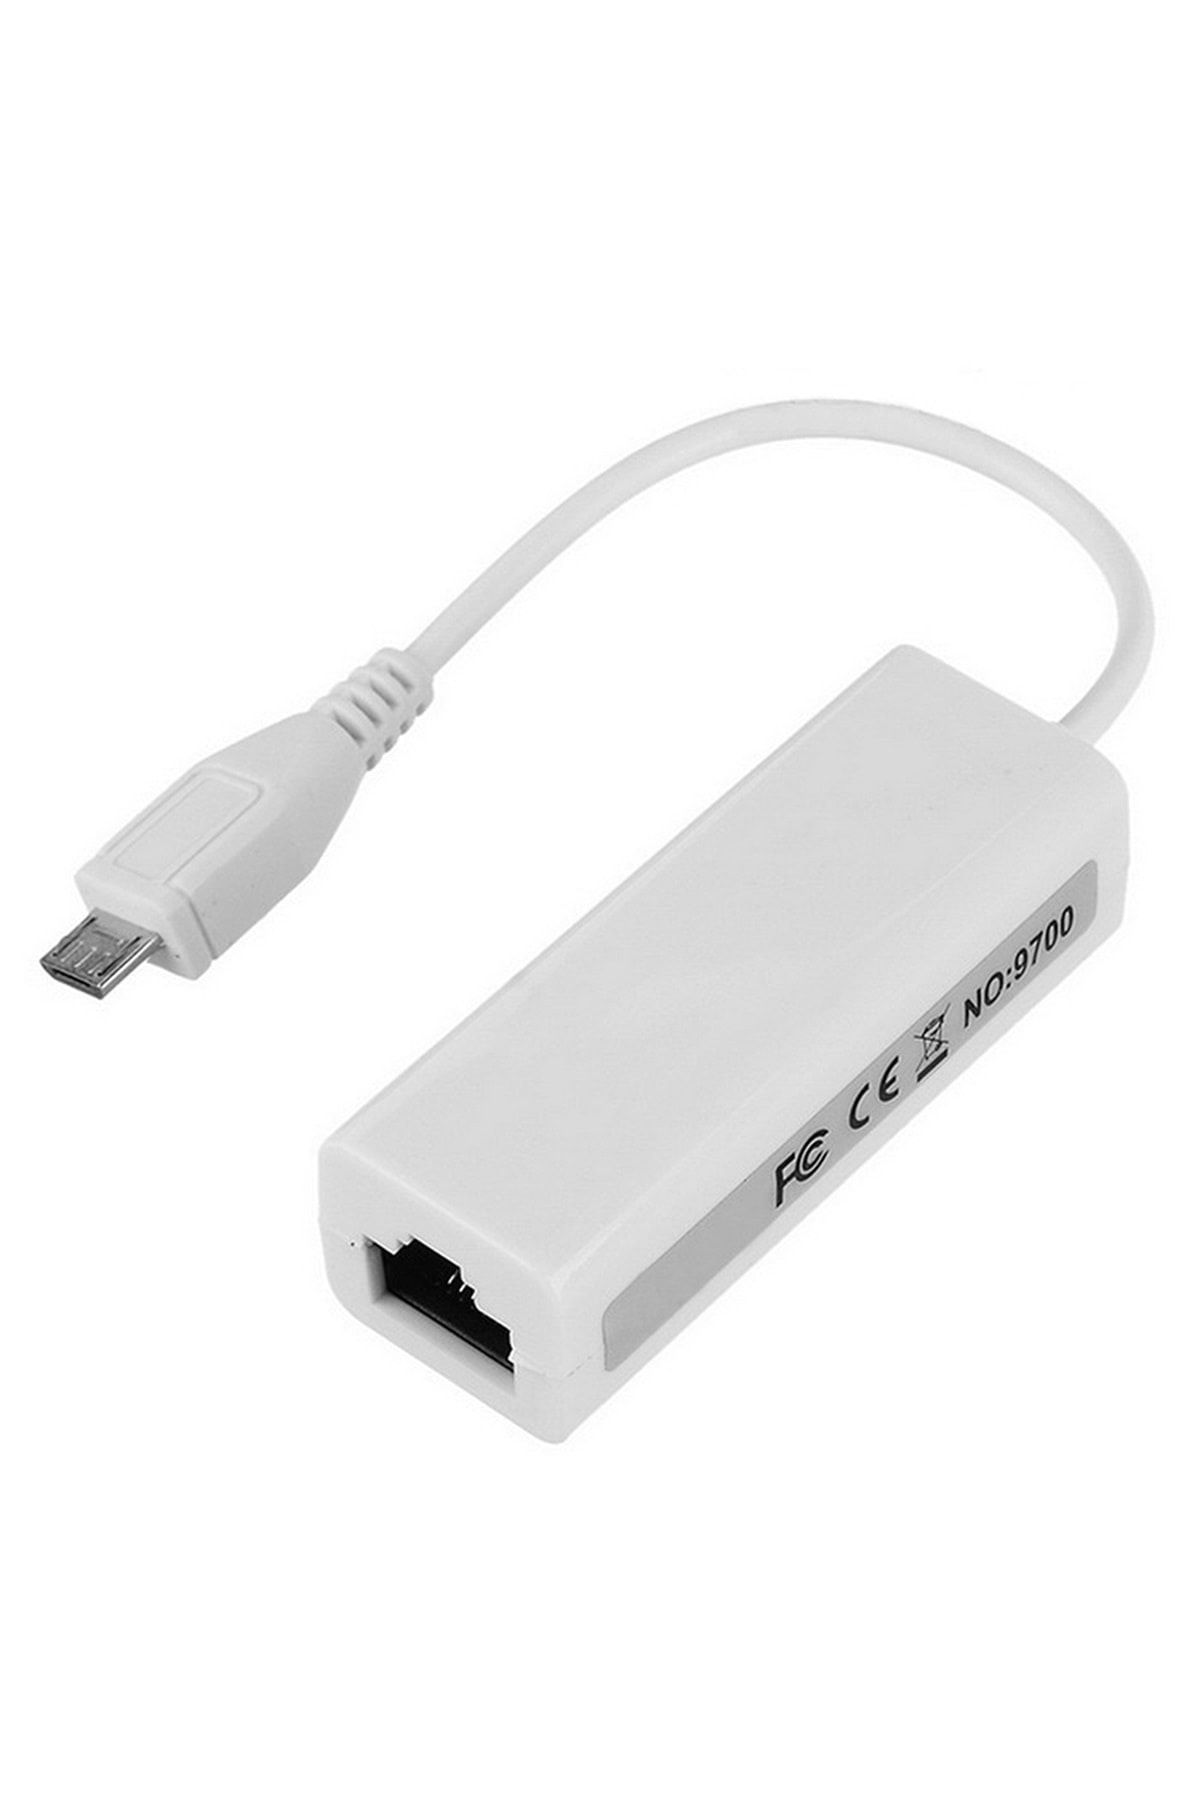 GÜVEN Sl-u62 Usb Mini 5pin To Ethernet Çevirici